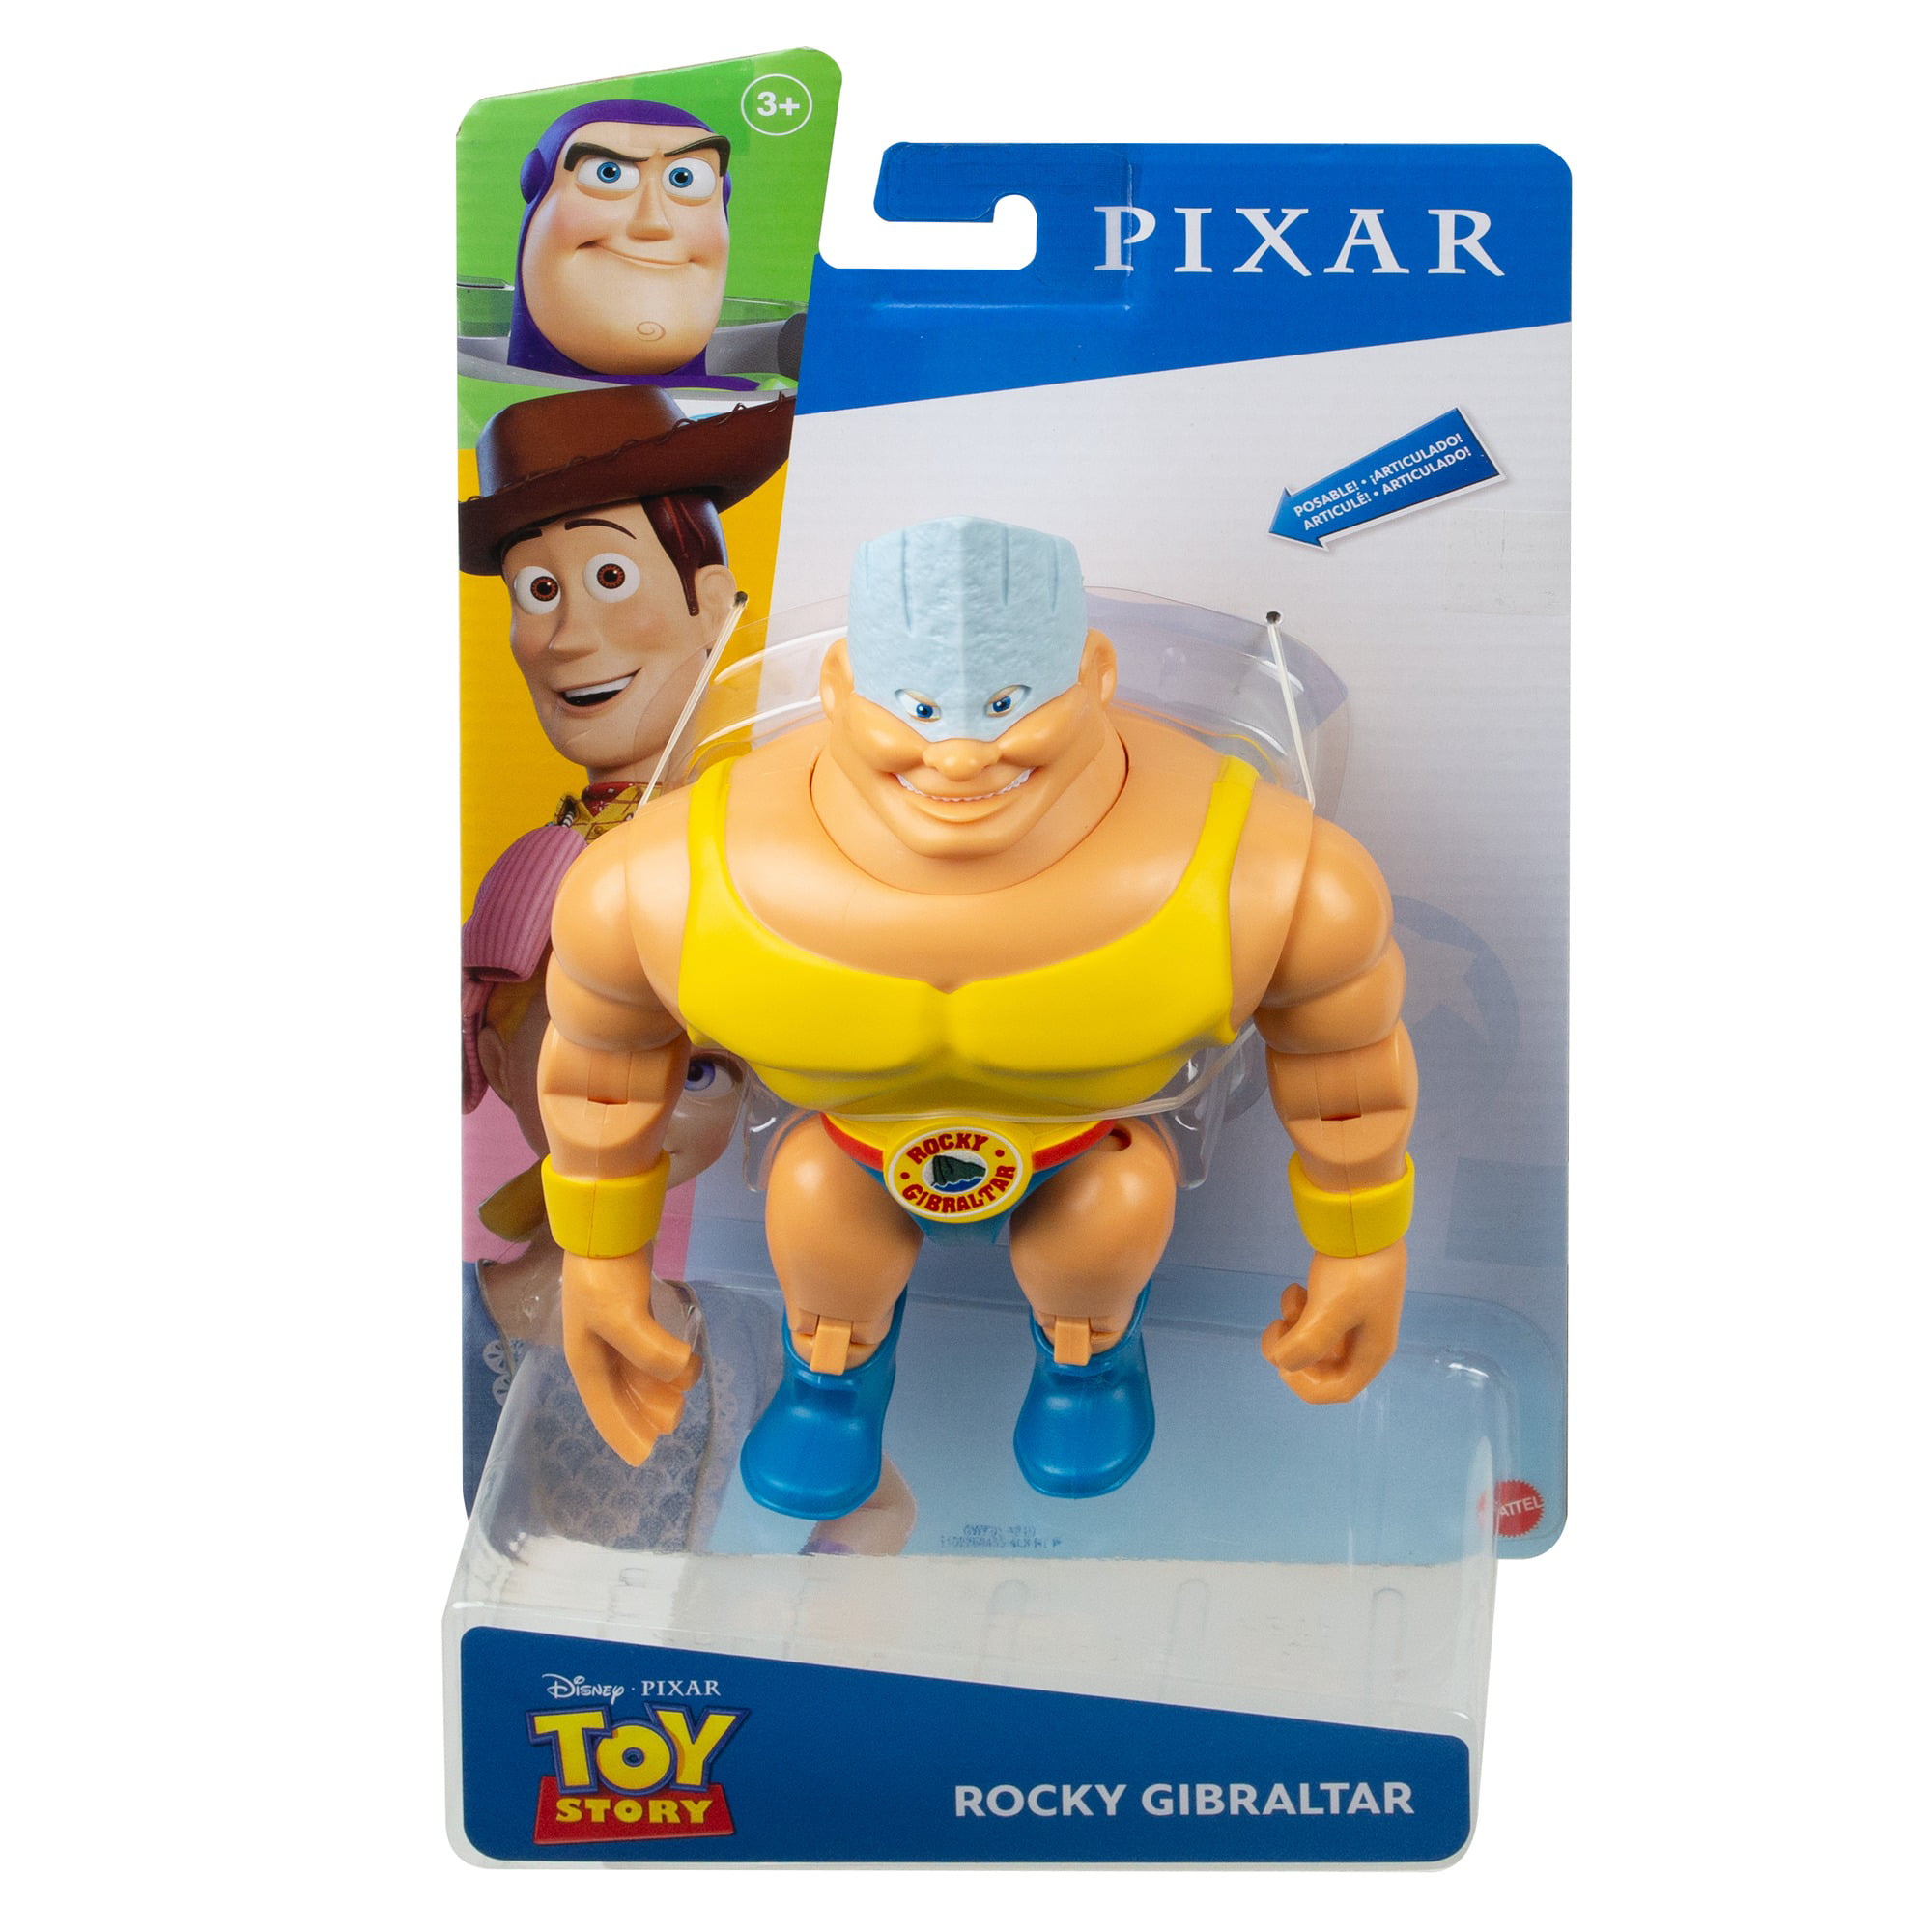 Disney Pixar Toy Story 4 Basic Figure Styles May Vary Walmart Com Walmart Com